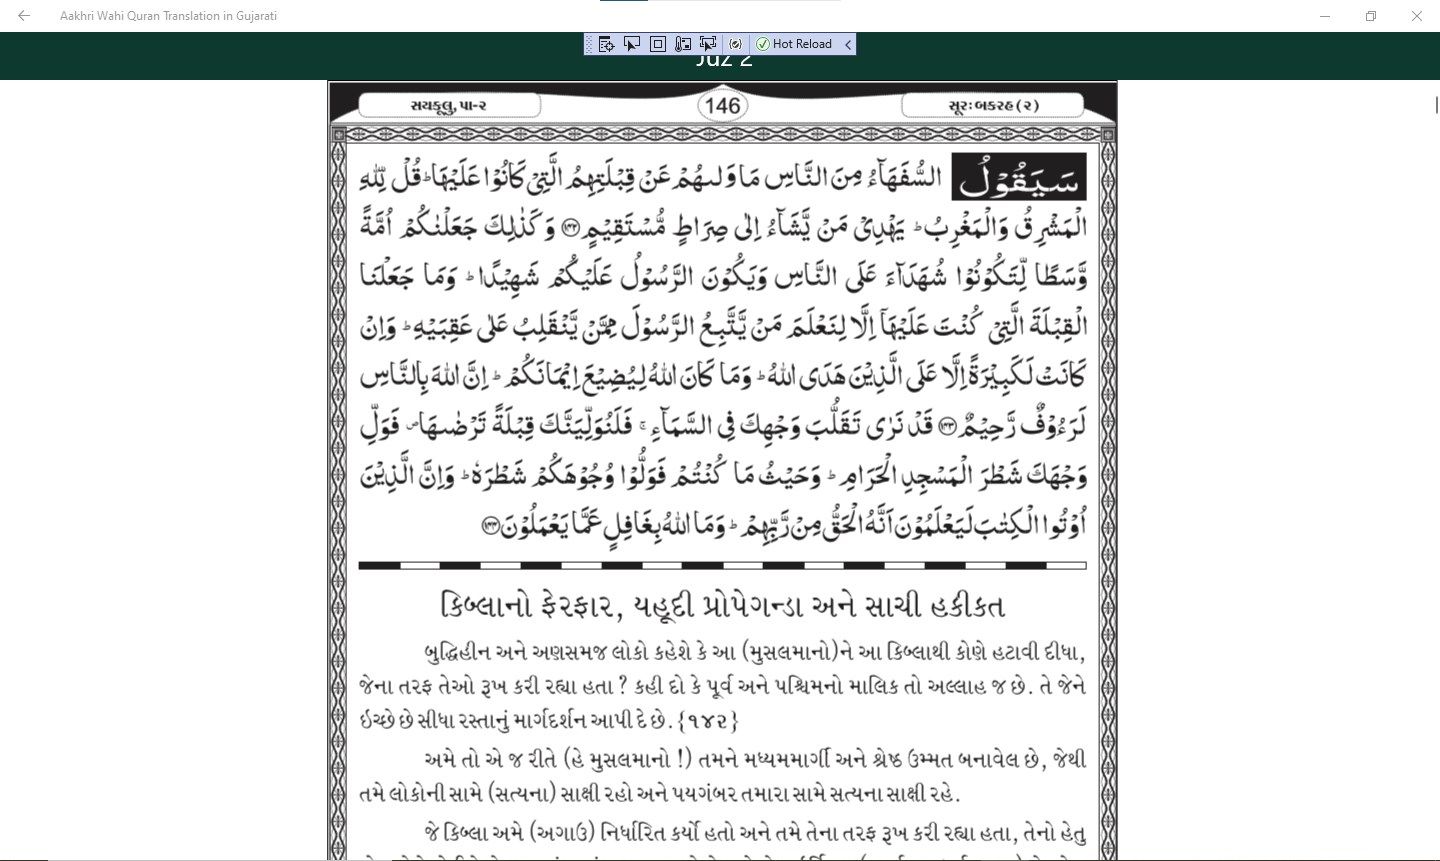 Aakhri Wahi Quran Translation in Gujarati